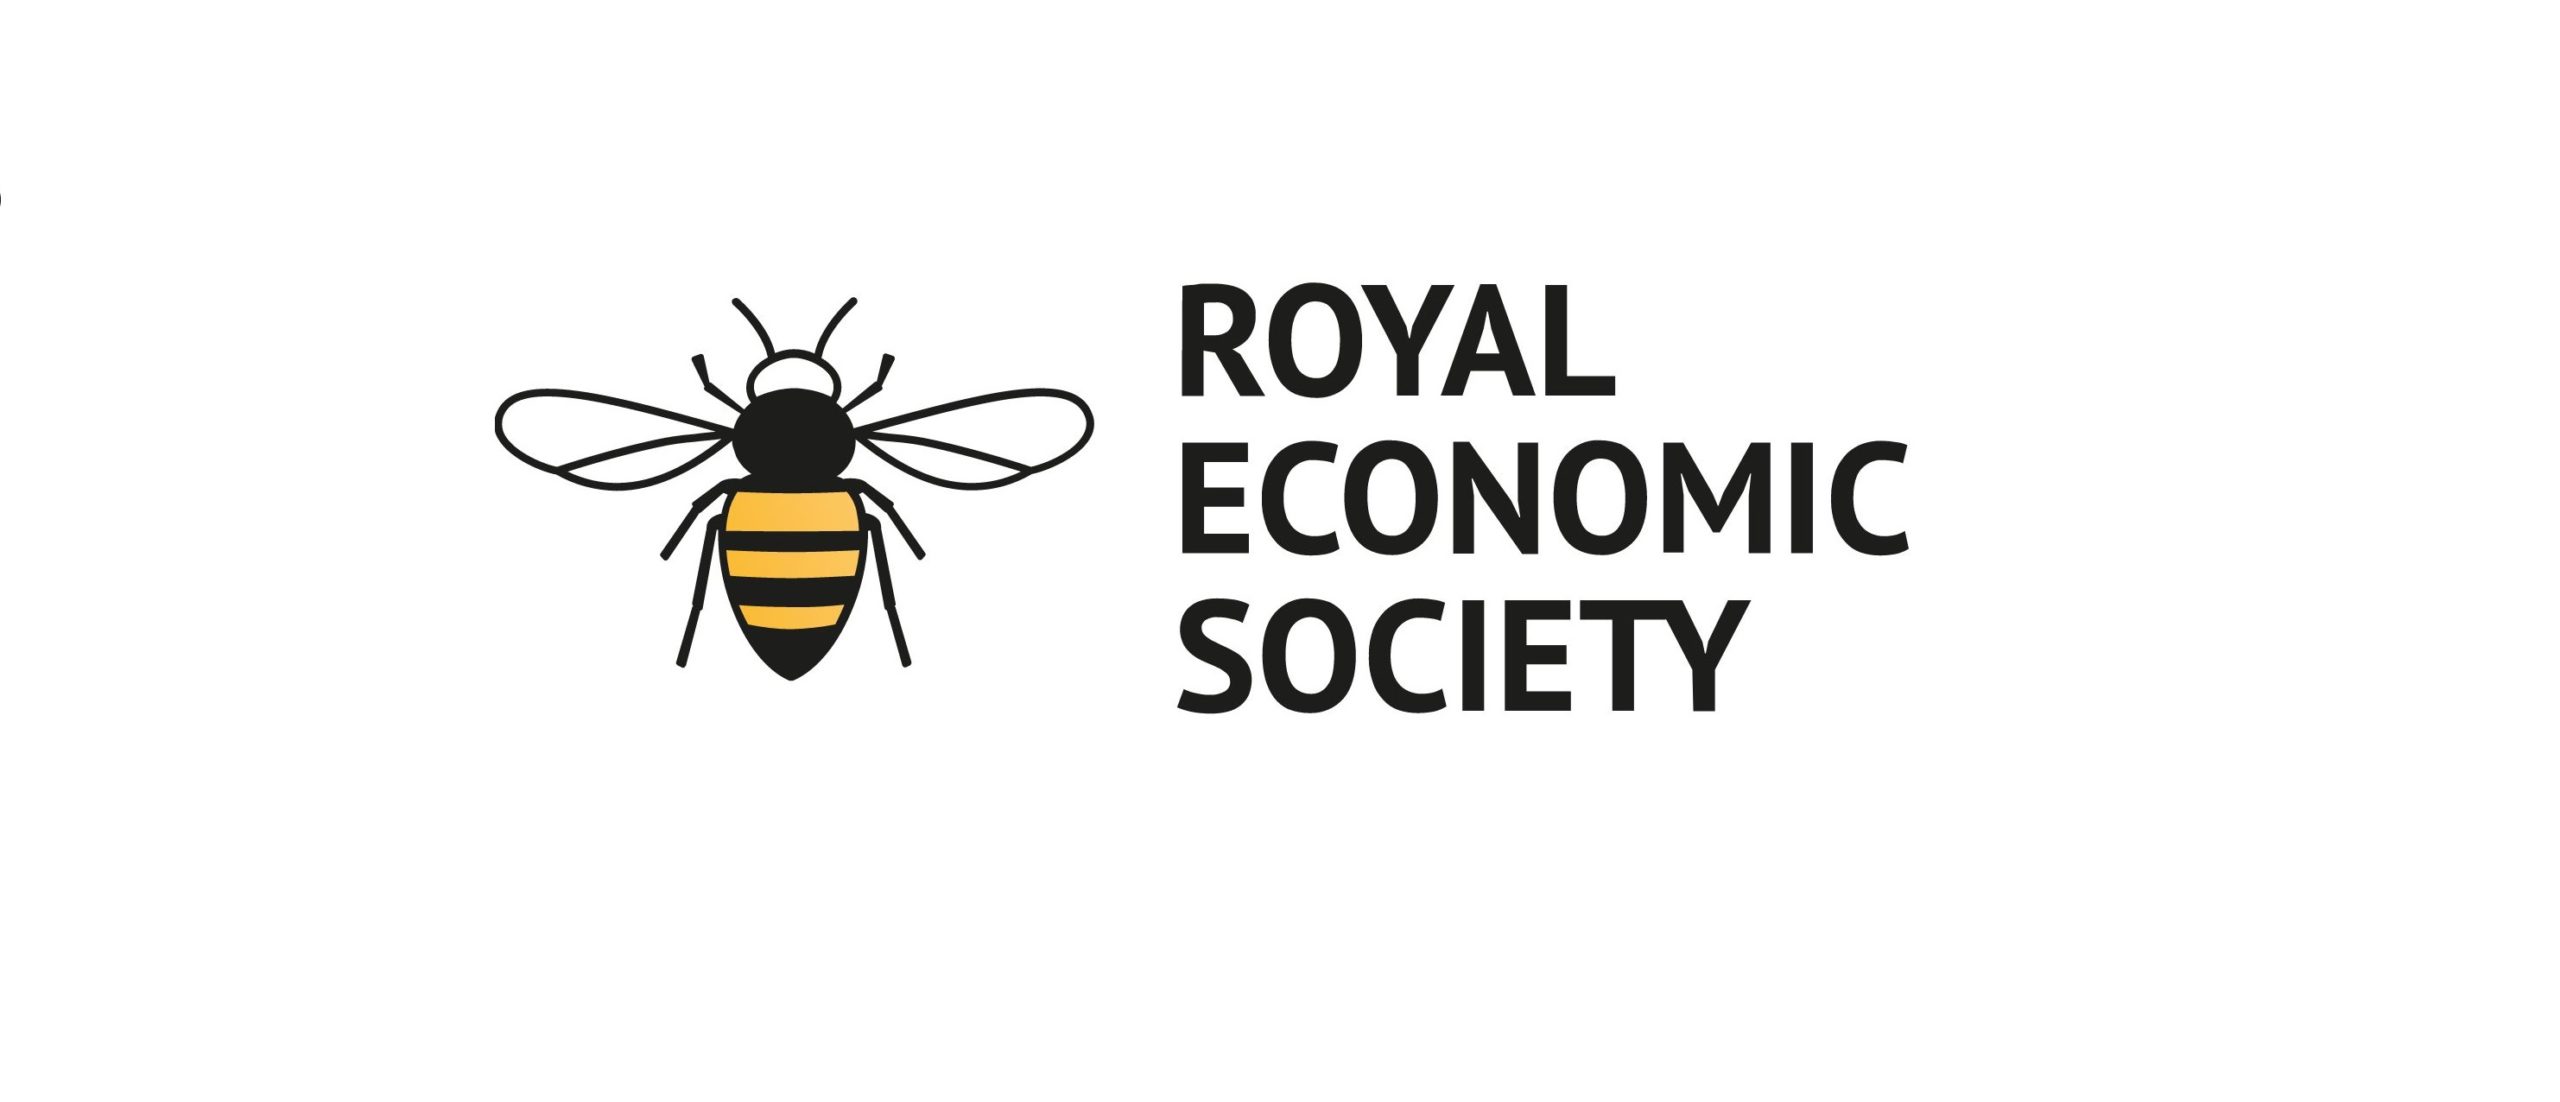 Royal Economic Society (RES) Conference 2022, 11-13 April 2022